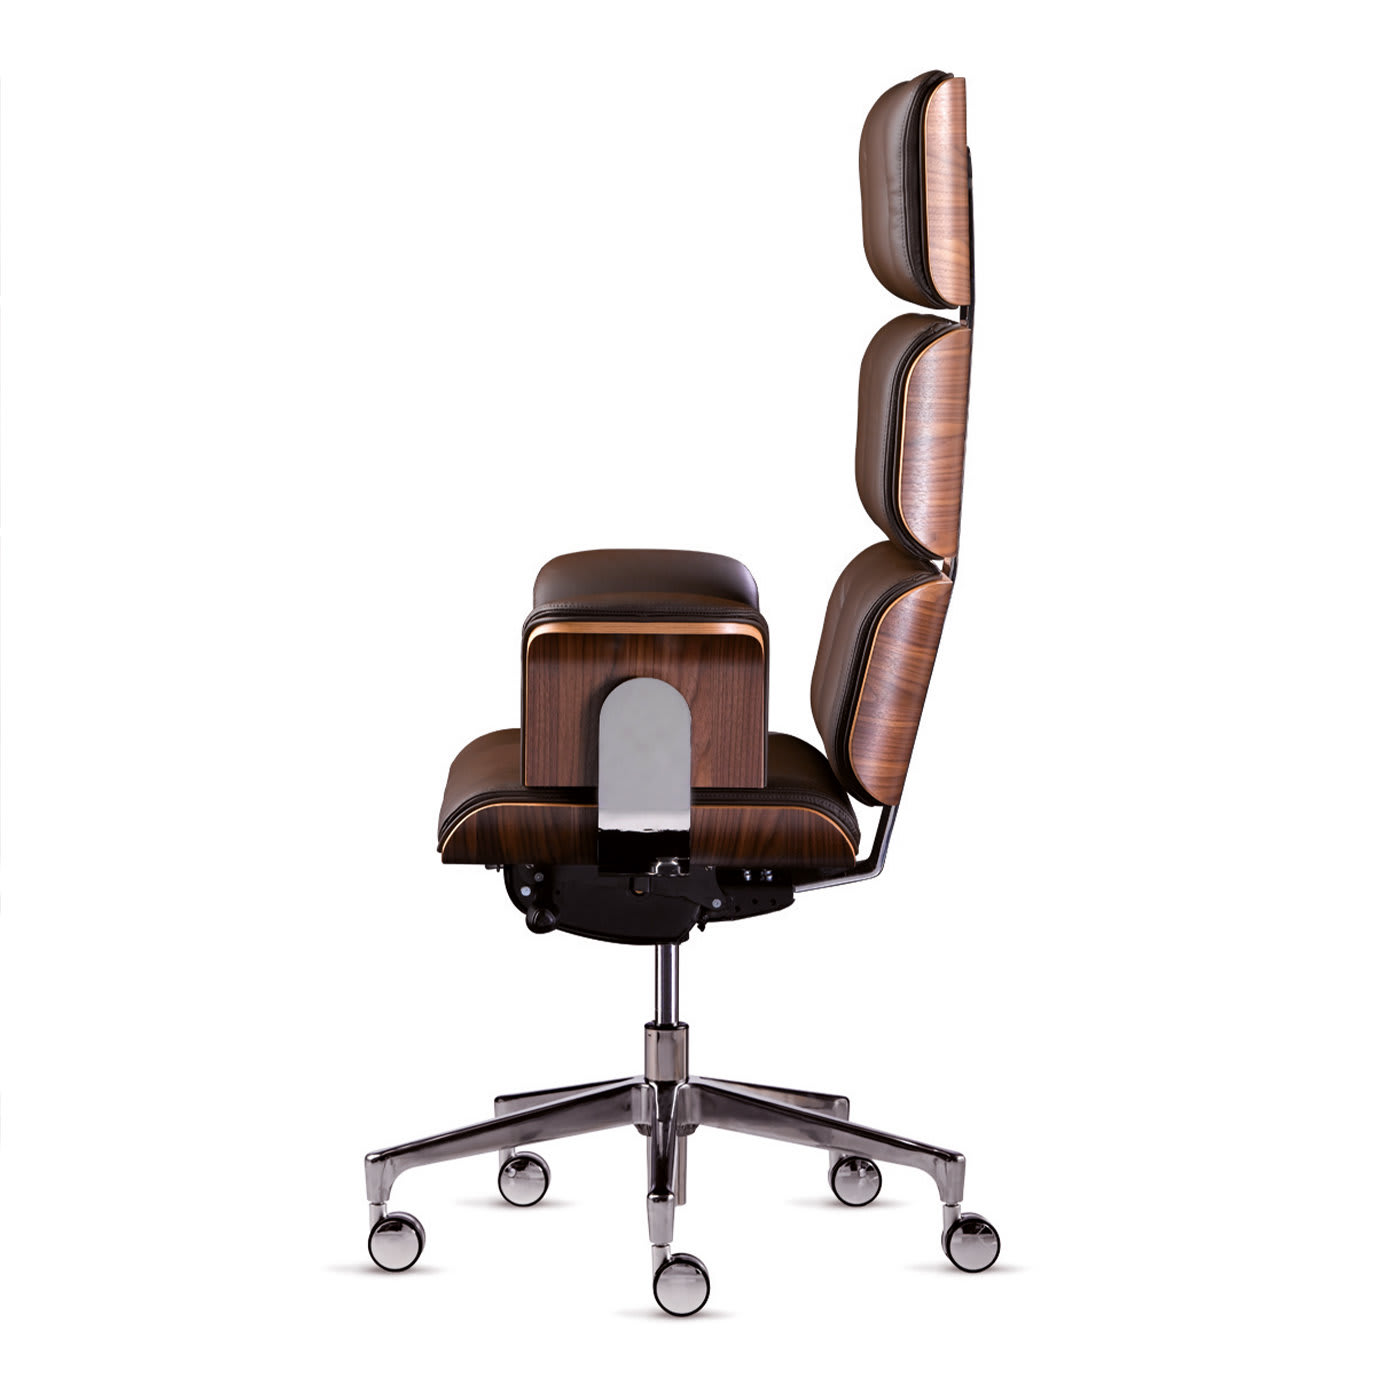 Armadillo 1 Dark Brown High Back Swivel Office Armchair by Rainer Bachschmid - Altek Italia Design